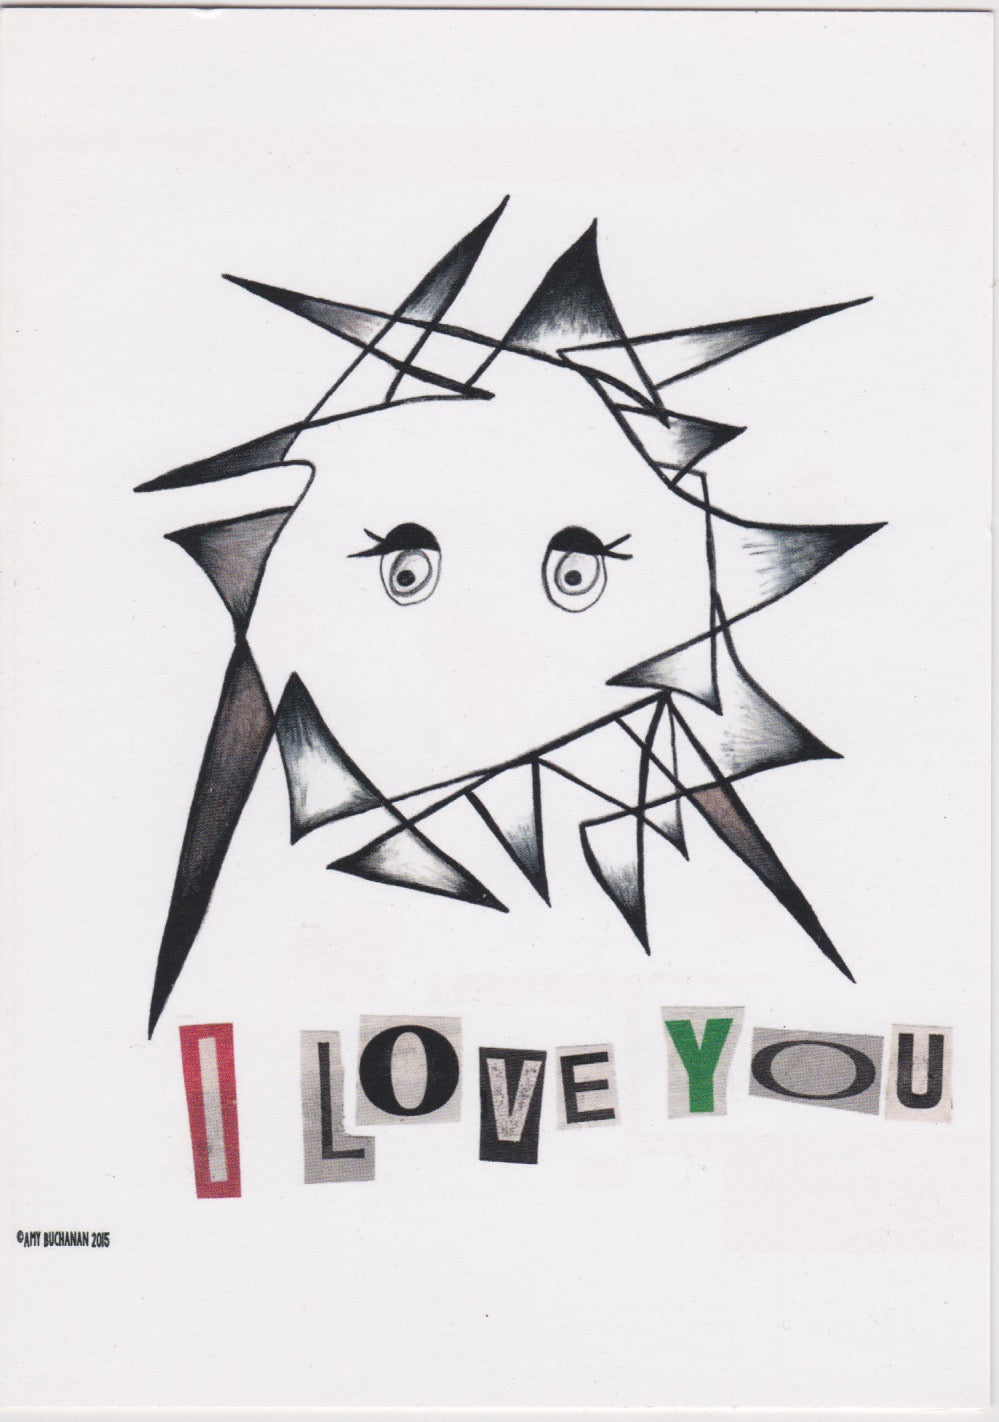 "I Love You" by Amy Buchanan